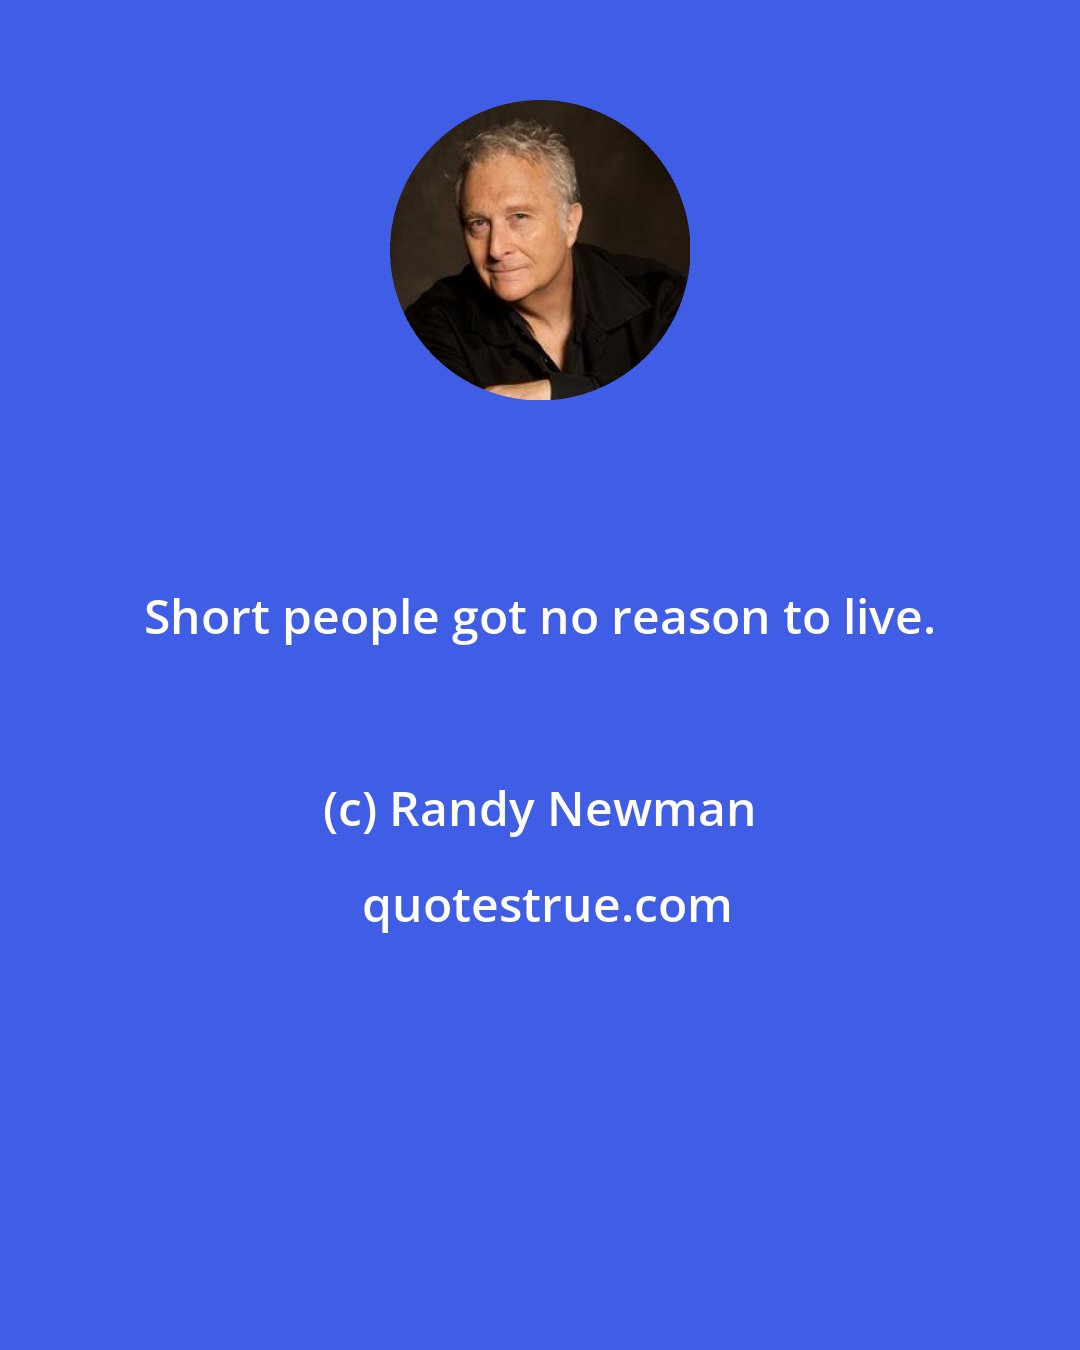 Randy Newman: Short people got no reason to live.